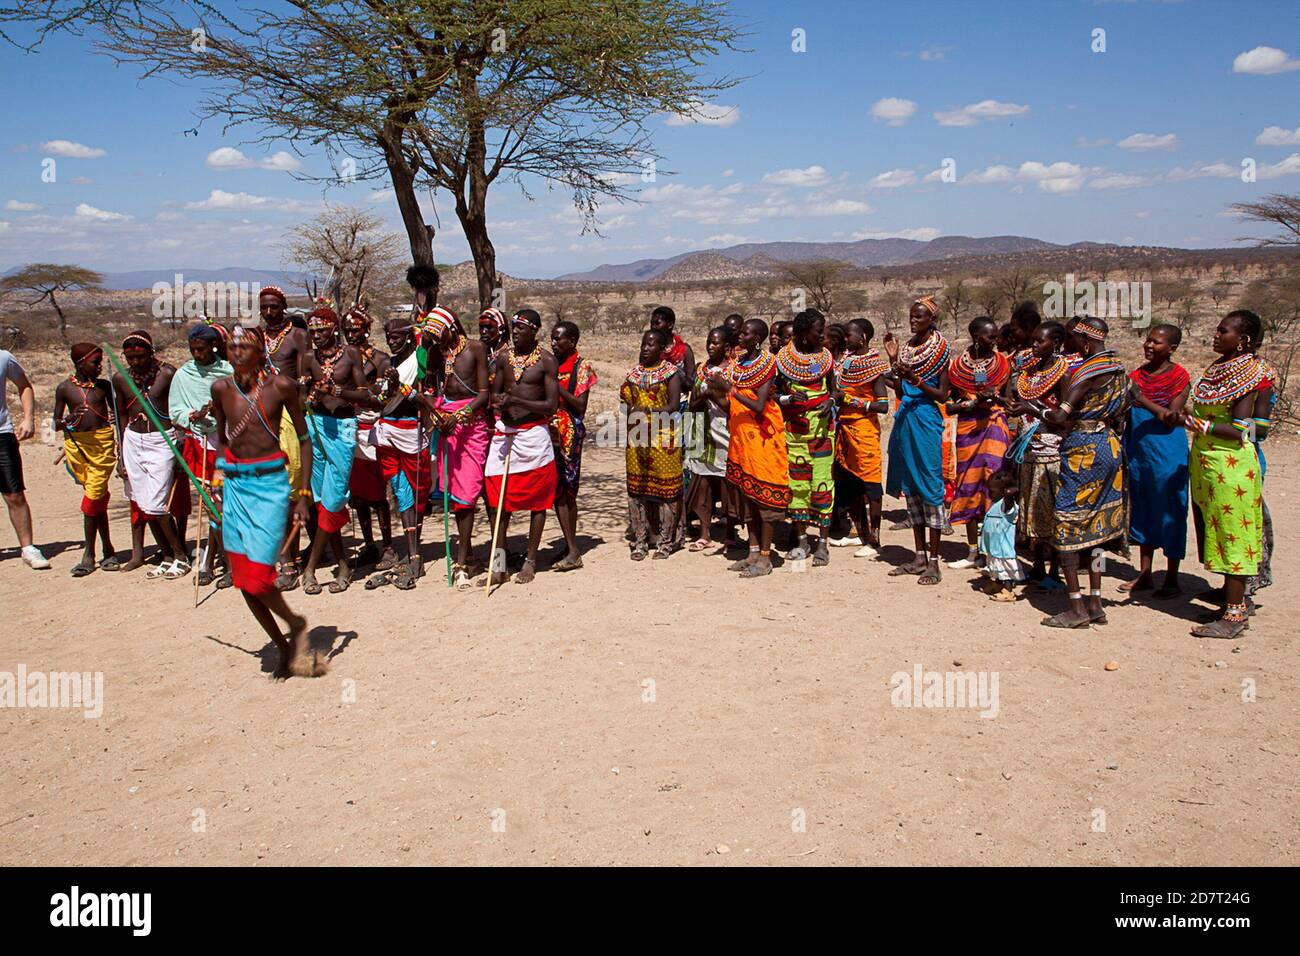 Membres de la tribu Samburu dans une danse traditionnelle, Kenya. Les Samburu sont un peuple nilotique du centre-nord du Kenya. Samburu sont pastorales semi-nomades Banque D'Images